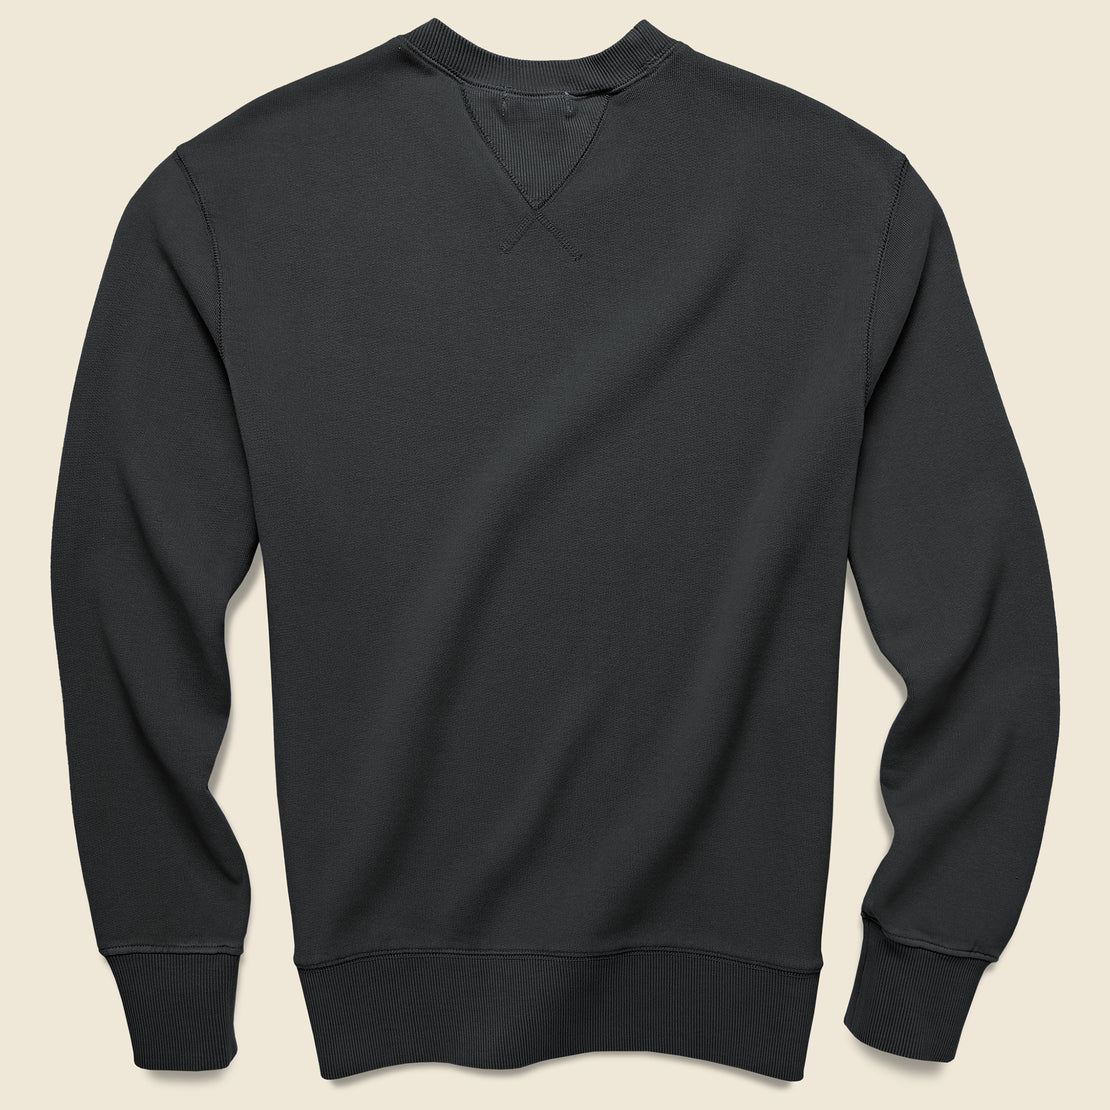 Queen of Country Crew Sweatshirt - Black - Future Vagabond - STAG Provisions - Tops - Fleece / Sweatshirt